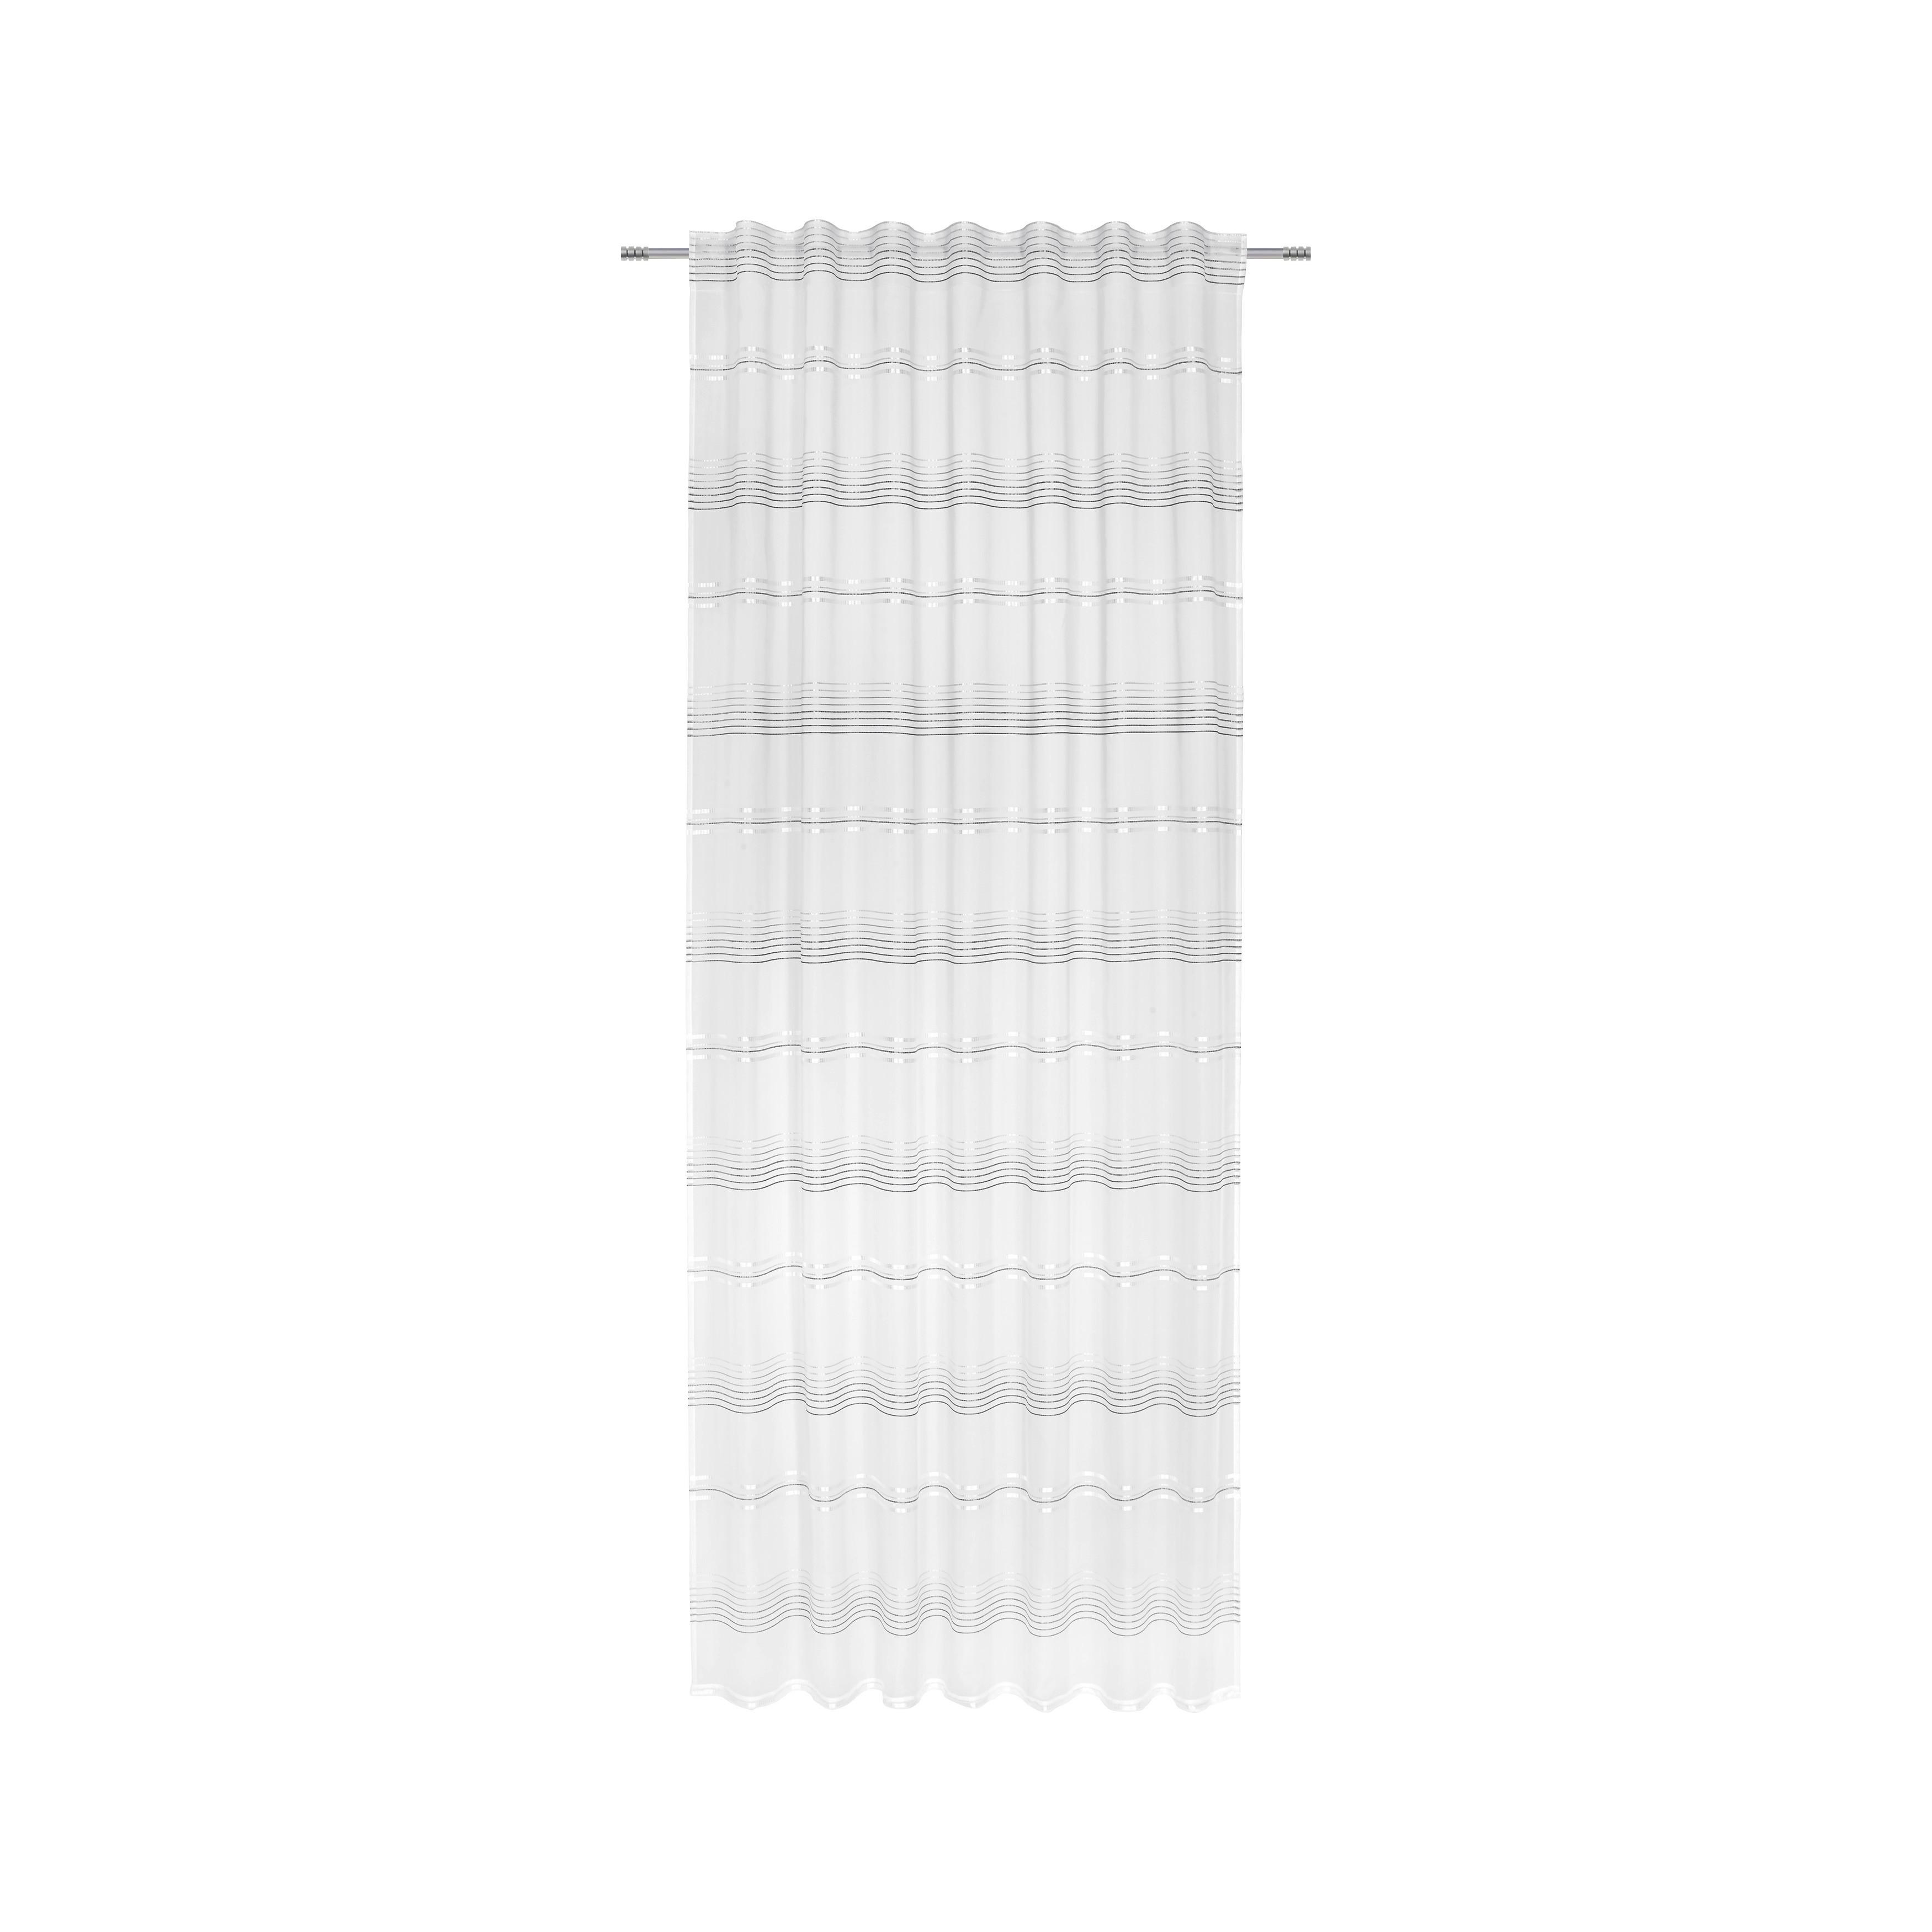 Fertigvorhang Louis  ca. 140x245cm - Weiß/Grau, KONVENTIONELL, Textil (140/245cm) - Modern Living